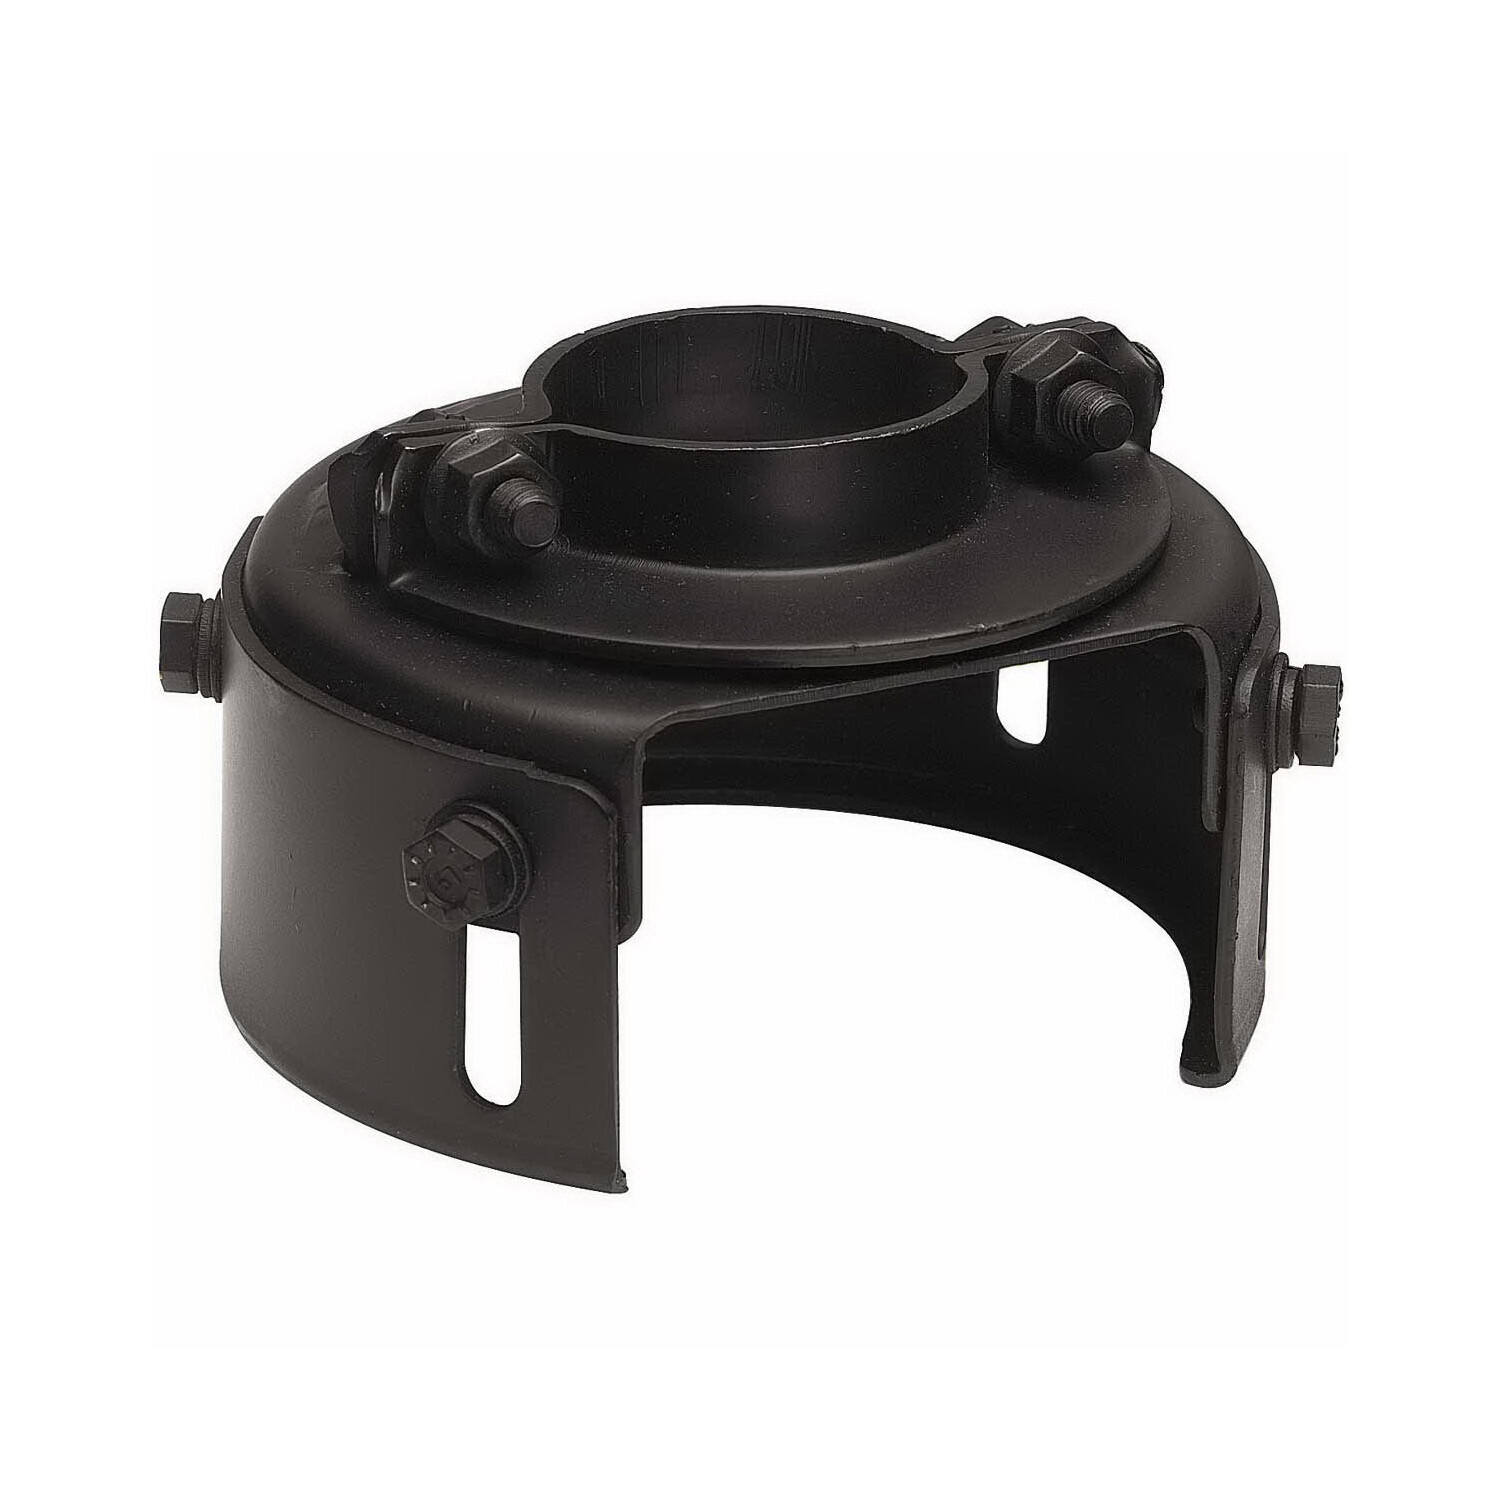 DeWALT® D284934 Type 11 Cup Wheel Guard - 4 in Flaring Cup Wheels - Black